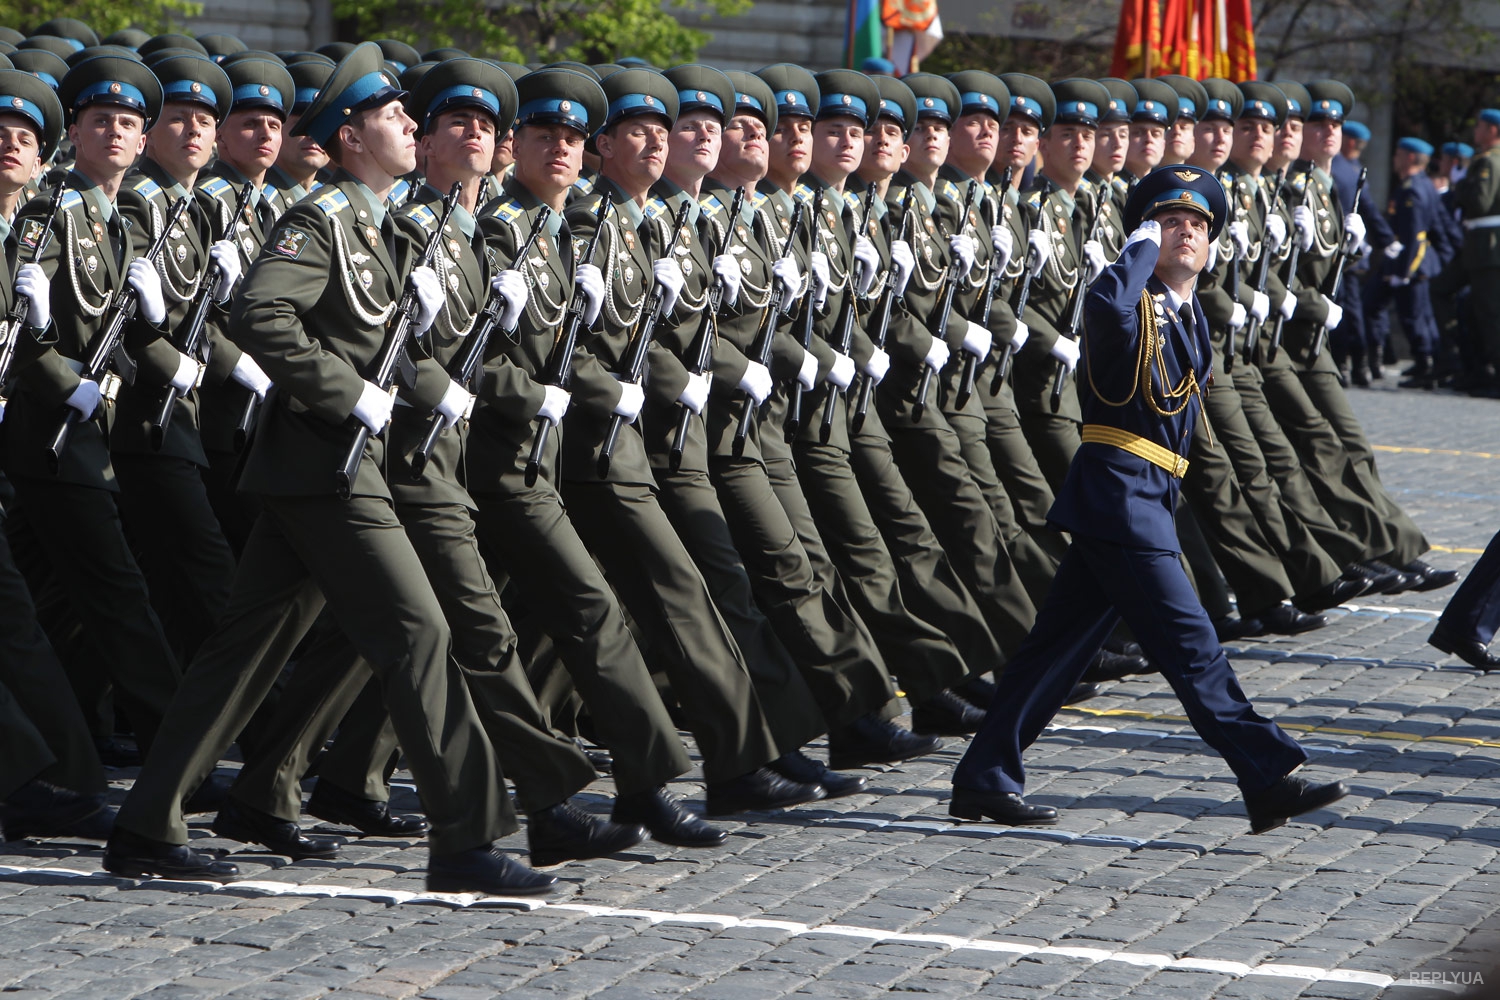 Шагают по площади. Солдаты на параде. Строй солдат на параде. Солдаты маршируют на параде. Марш российских солдат.